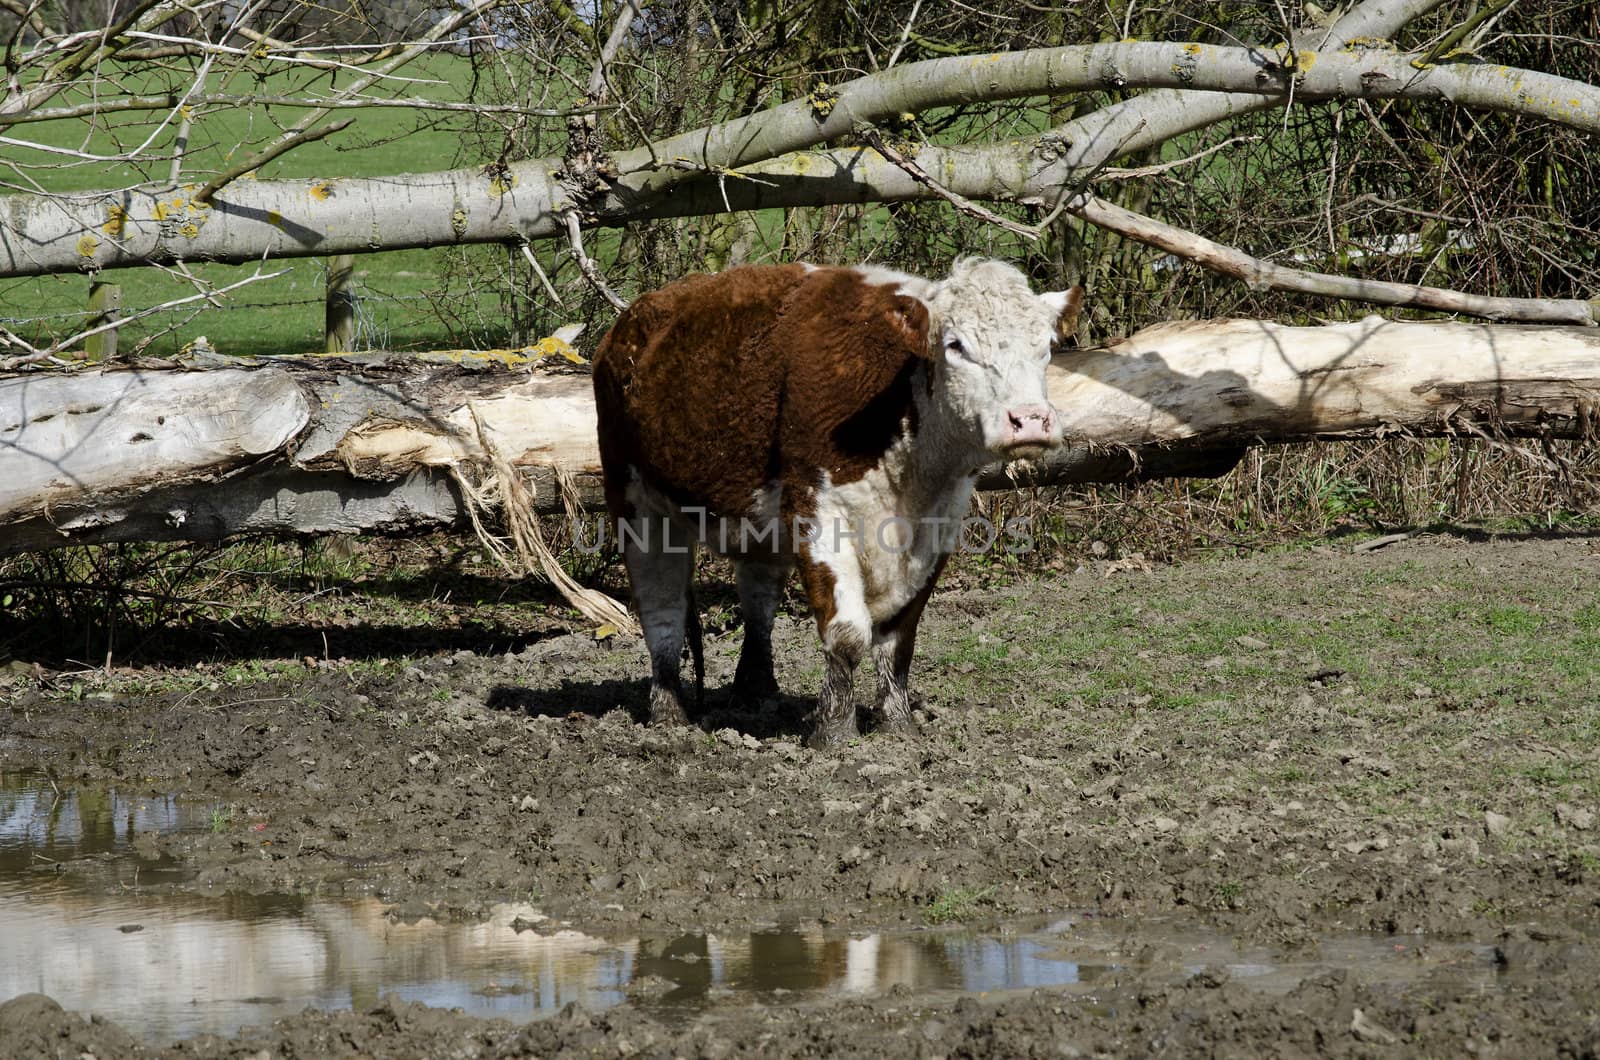 A young bull enjoying a splash in the mud